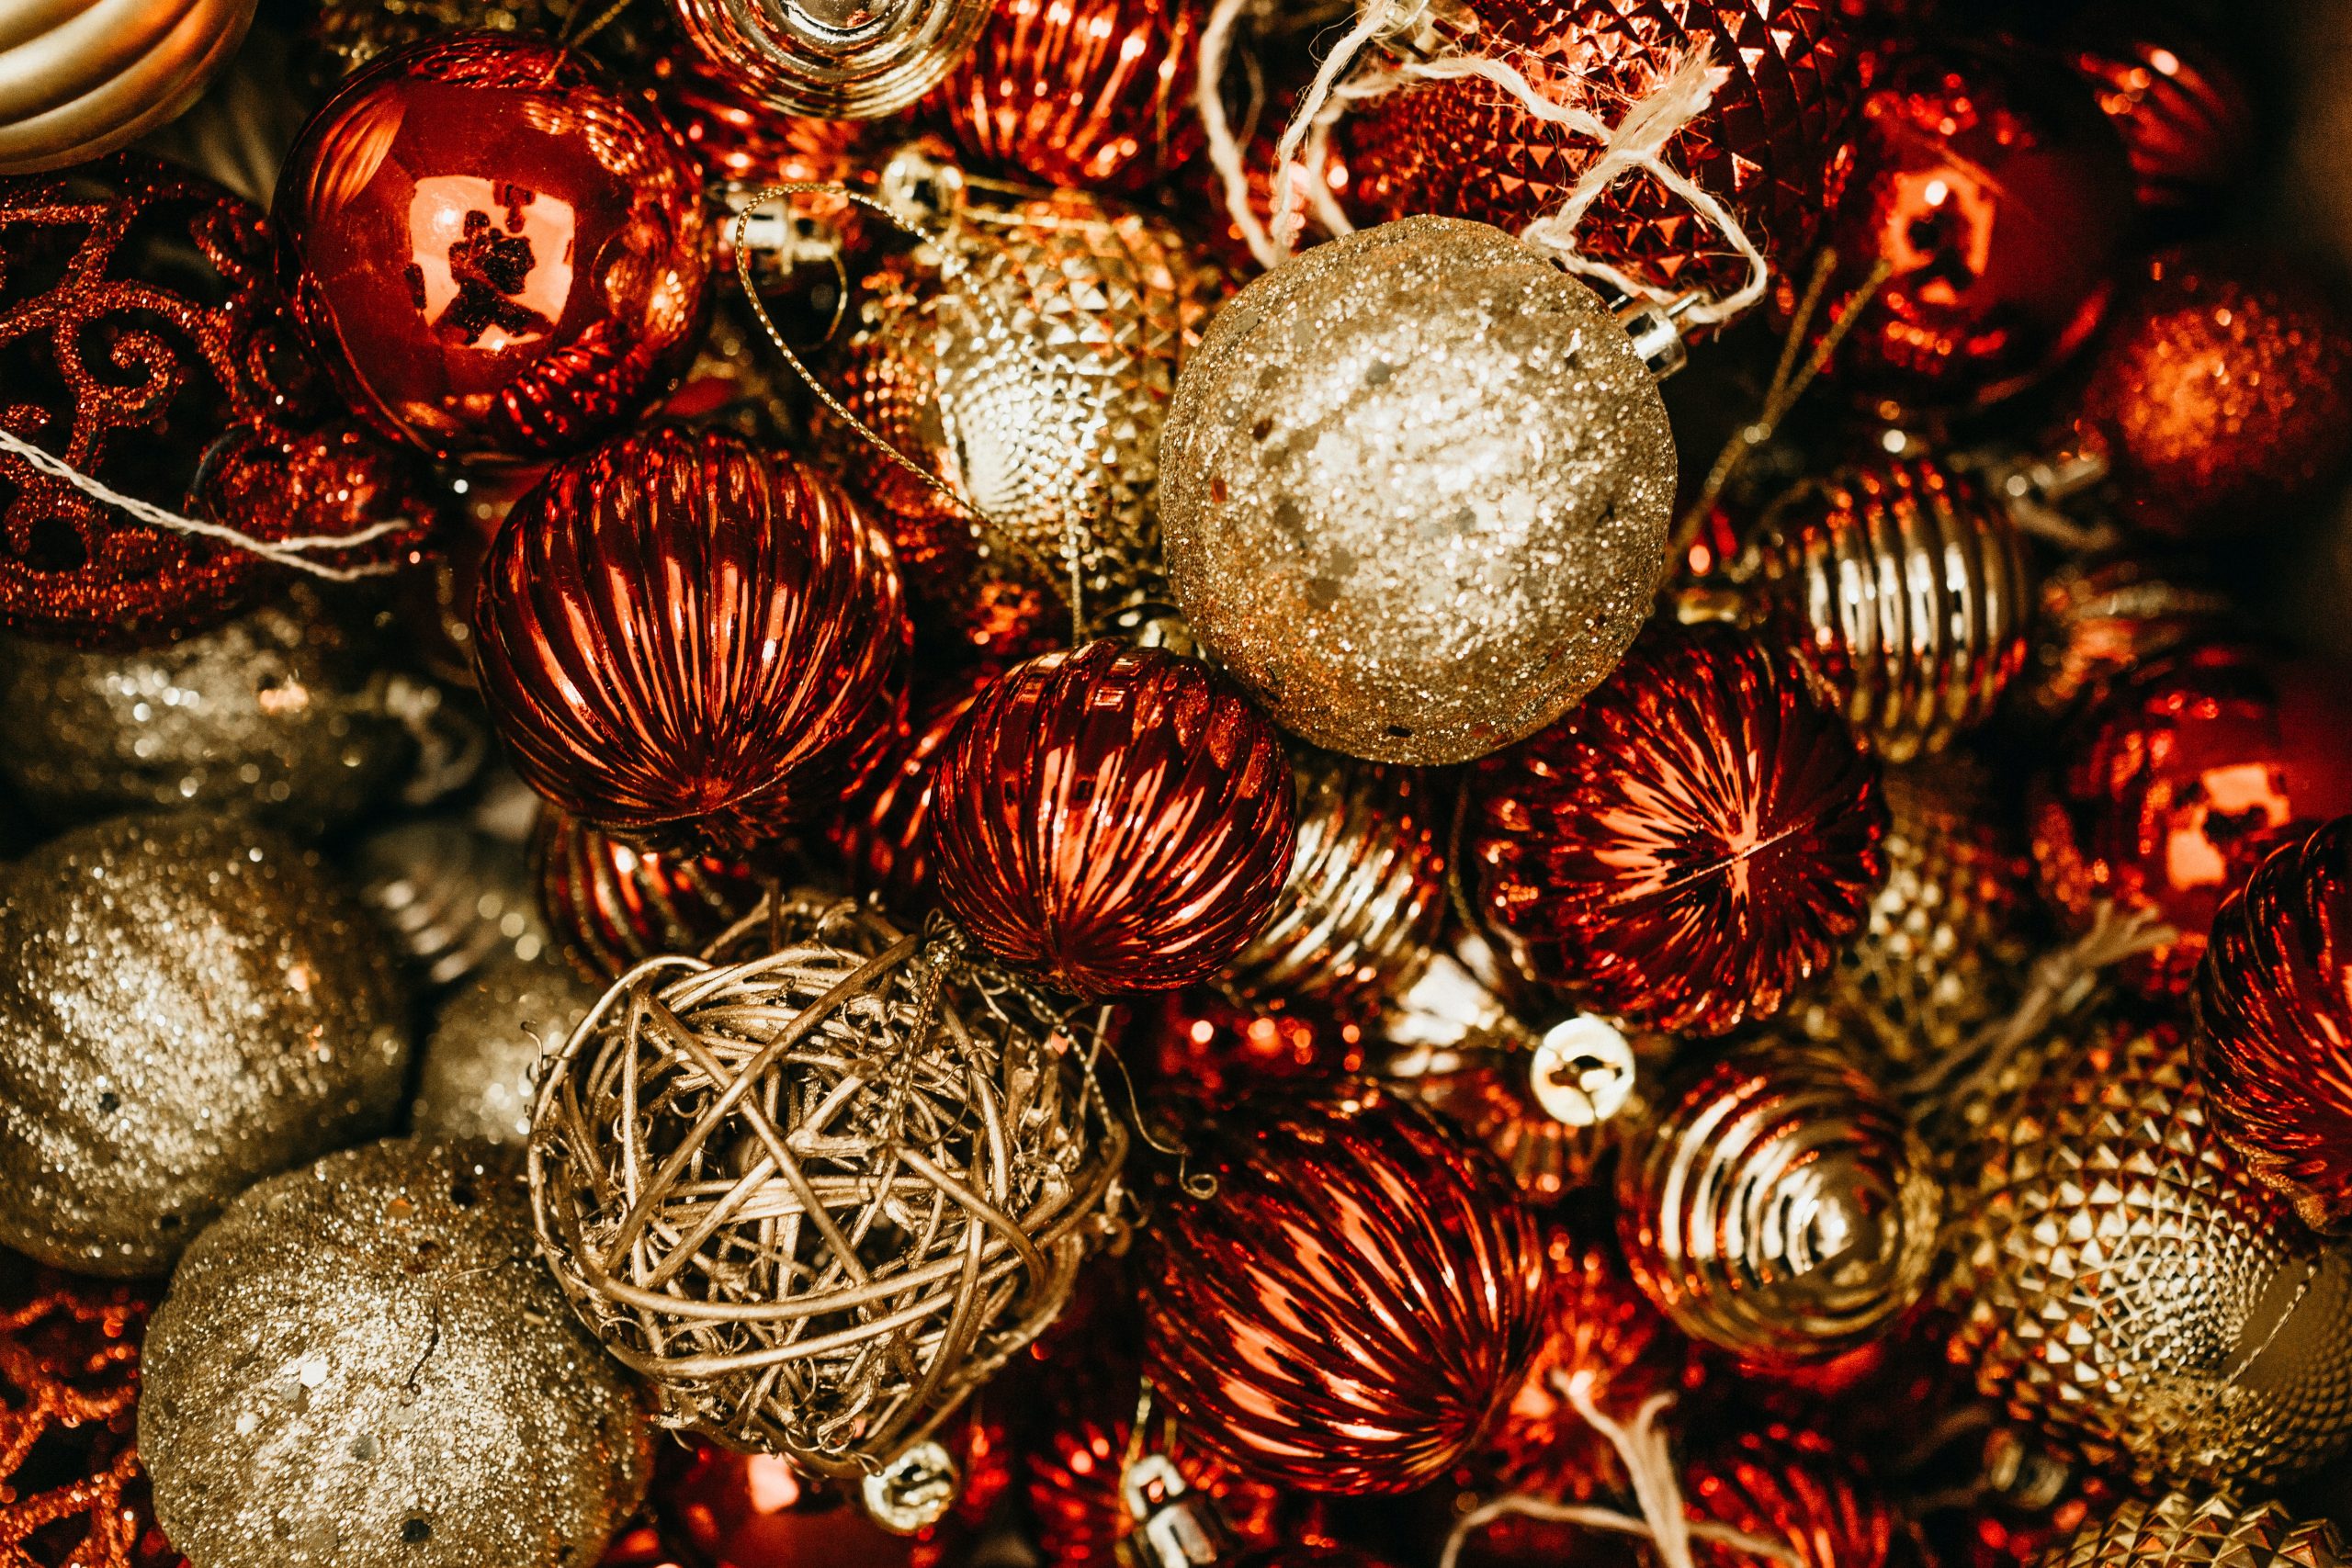 Christmas ball decorations